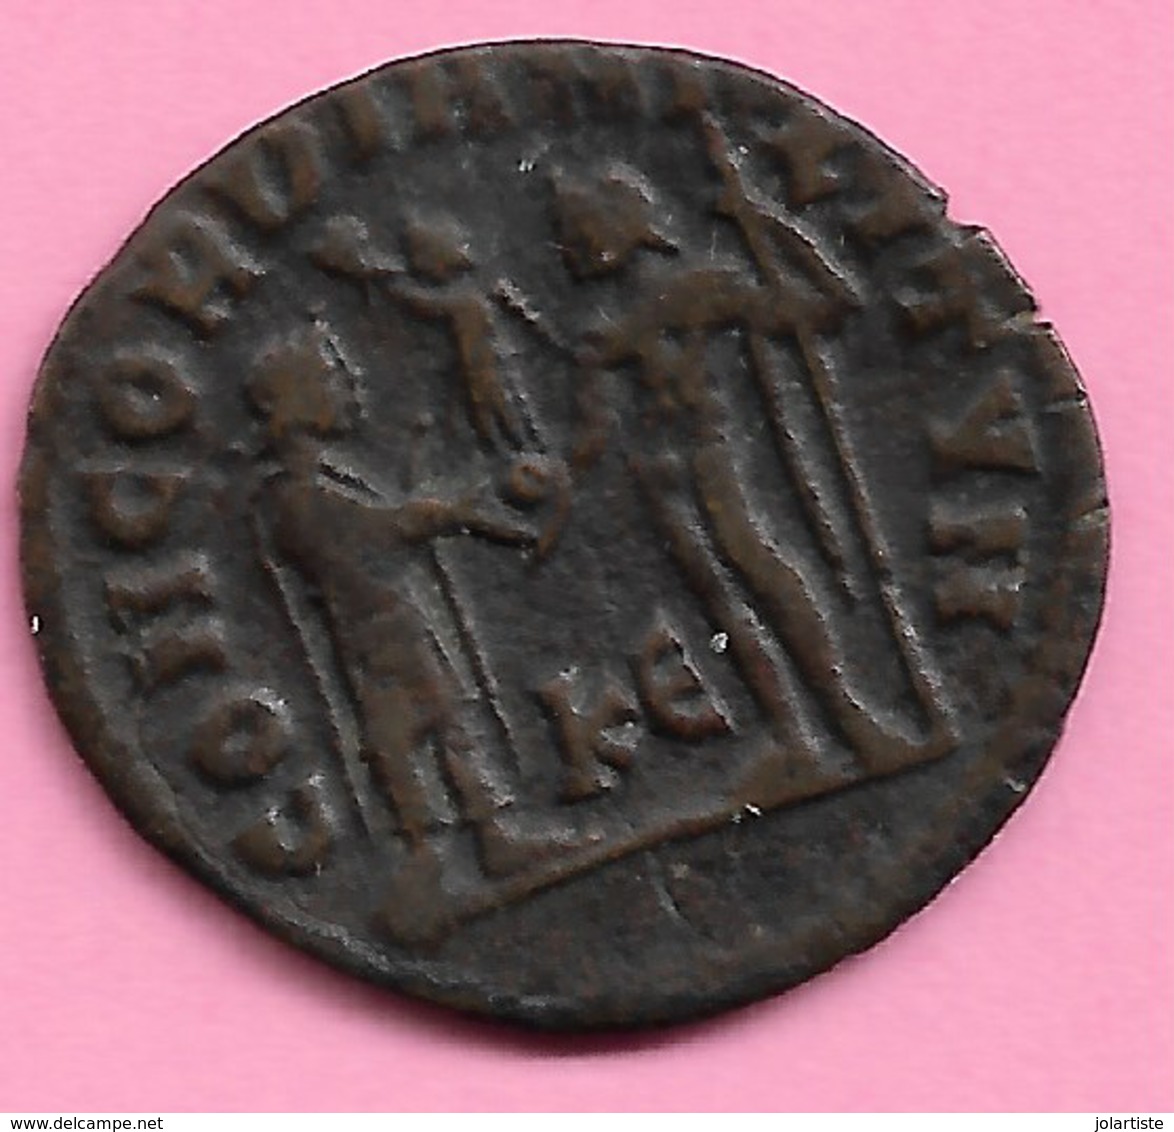 Monnaie Romaine ???? Diametre 20 Mm Plat02 - 470-751 Merovingian